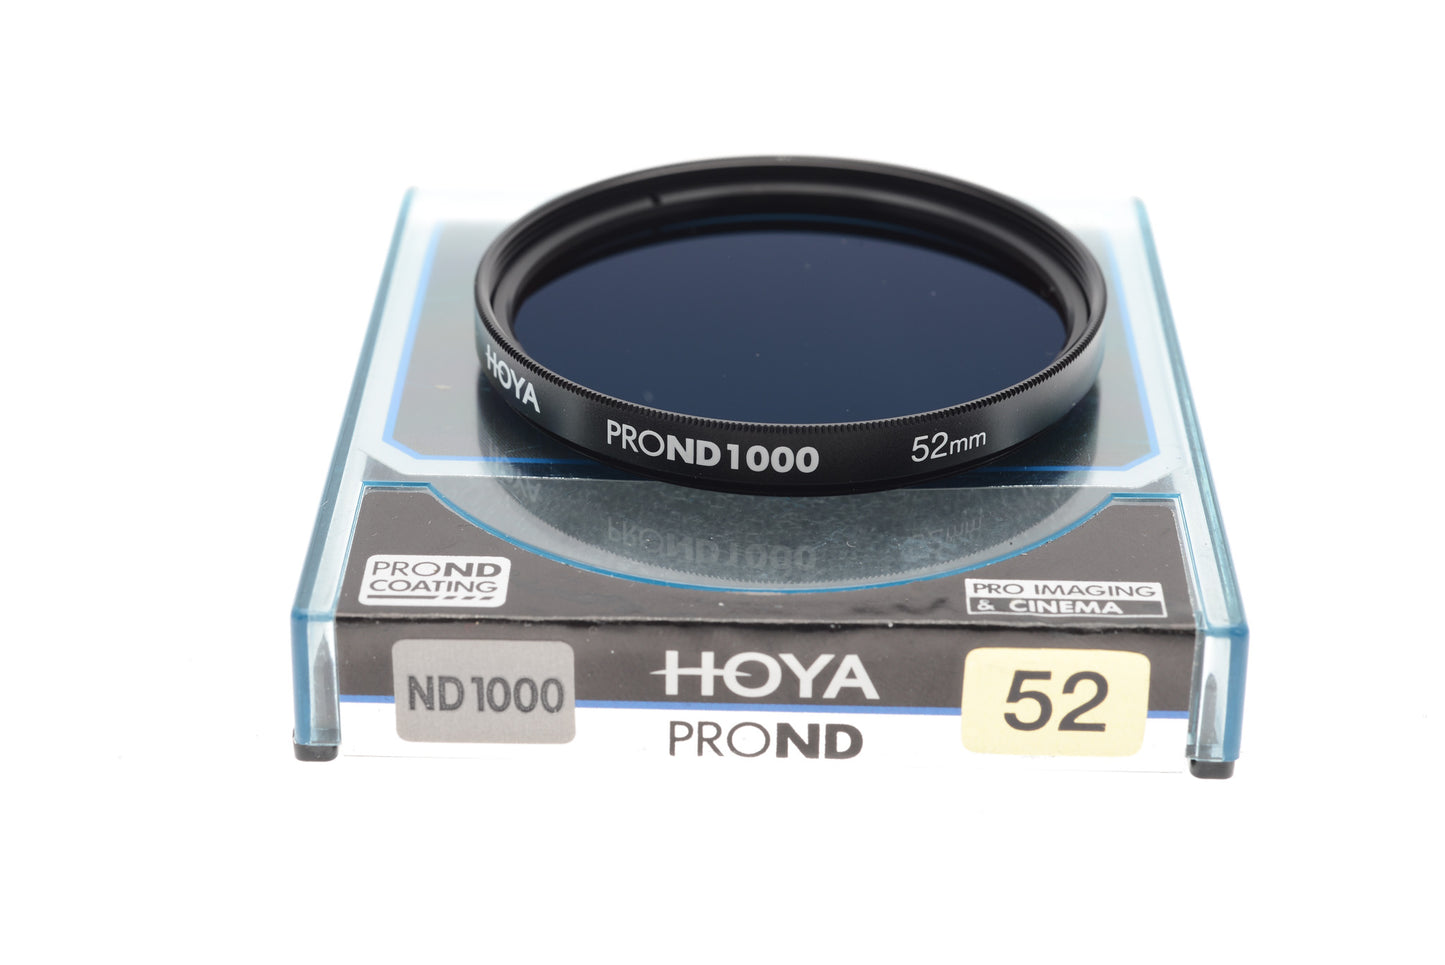 Hoya 52mm PROND1000 (ND 3.0) - Accessory